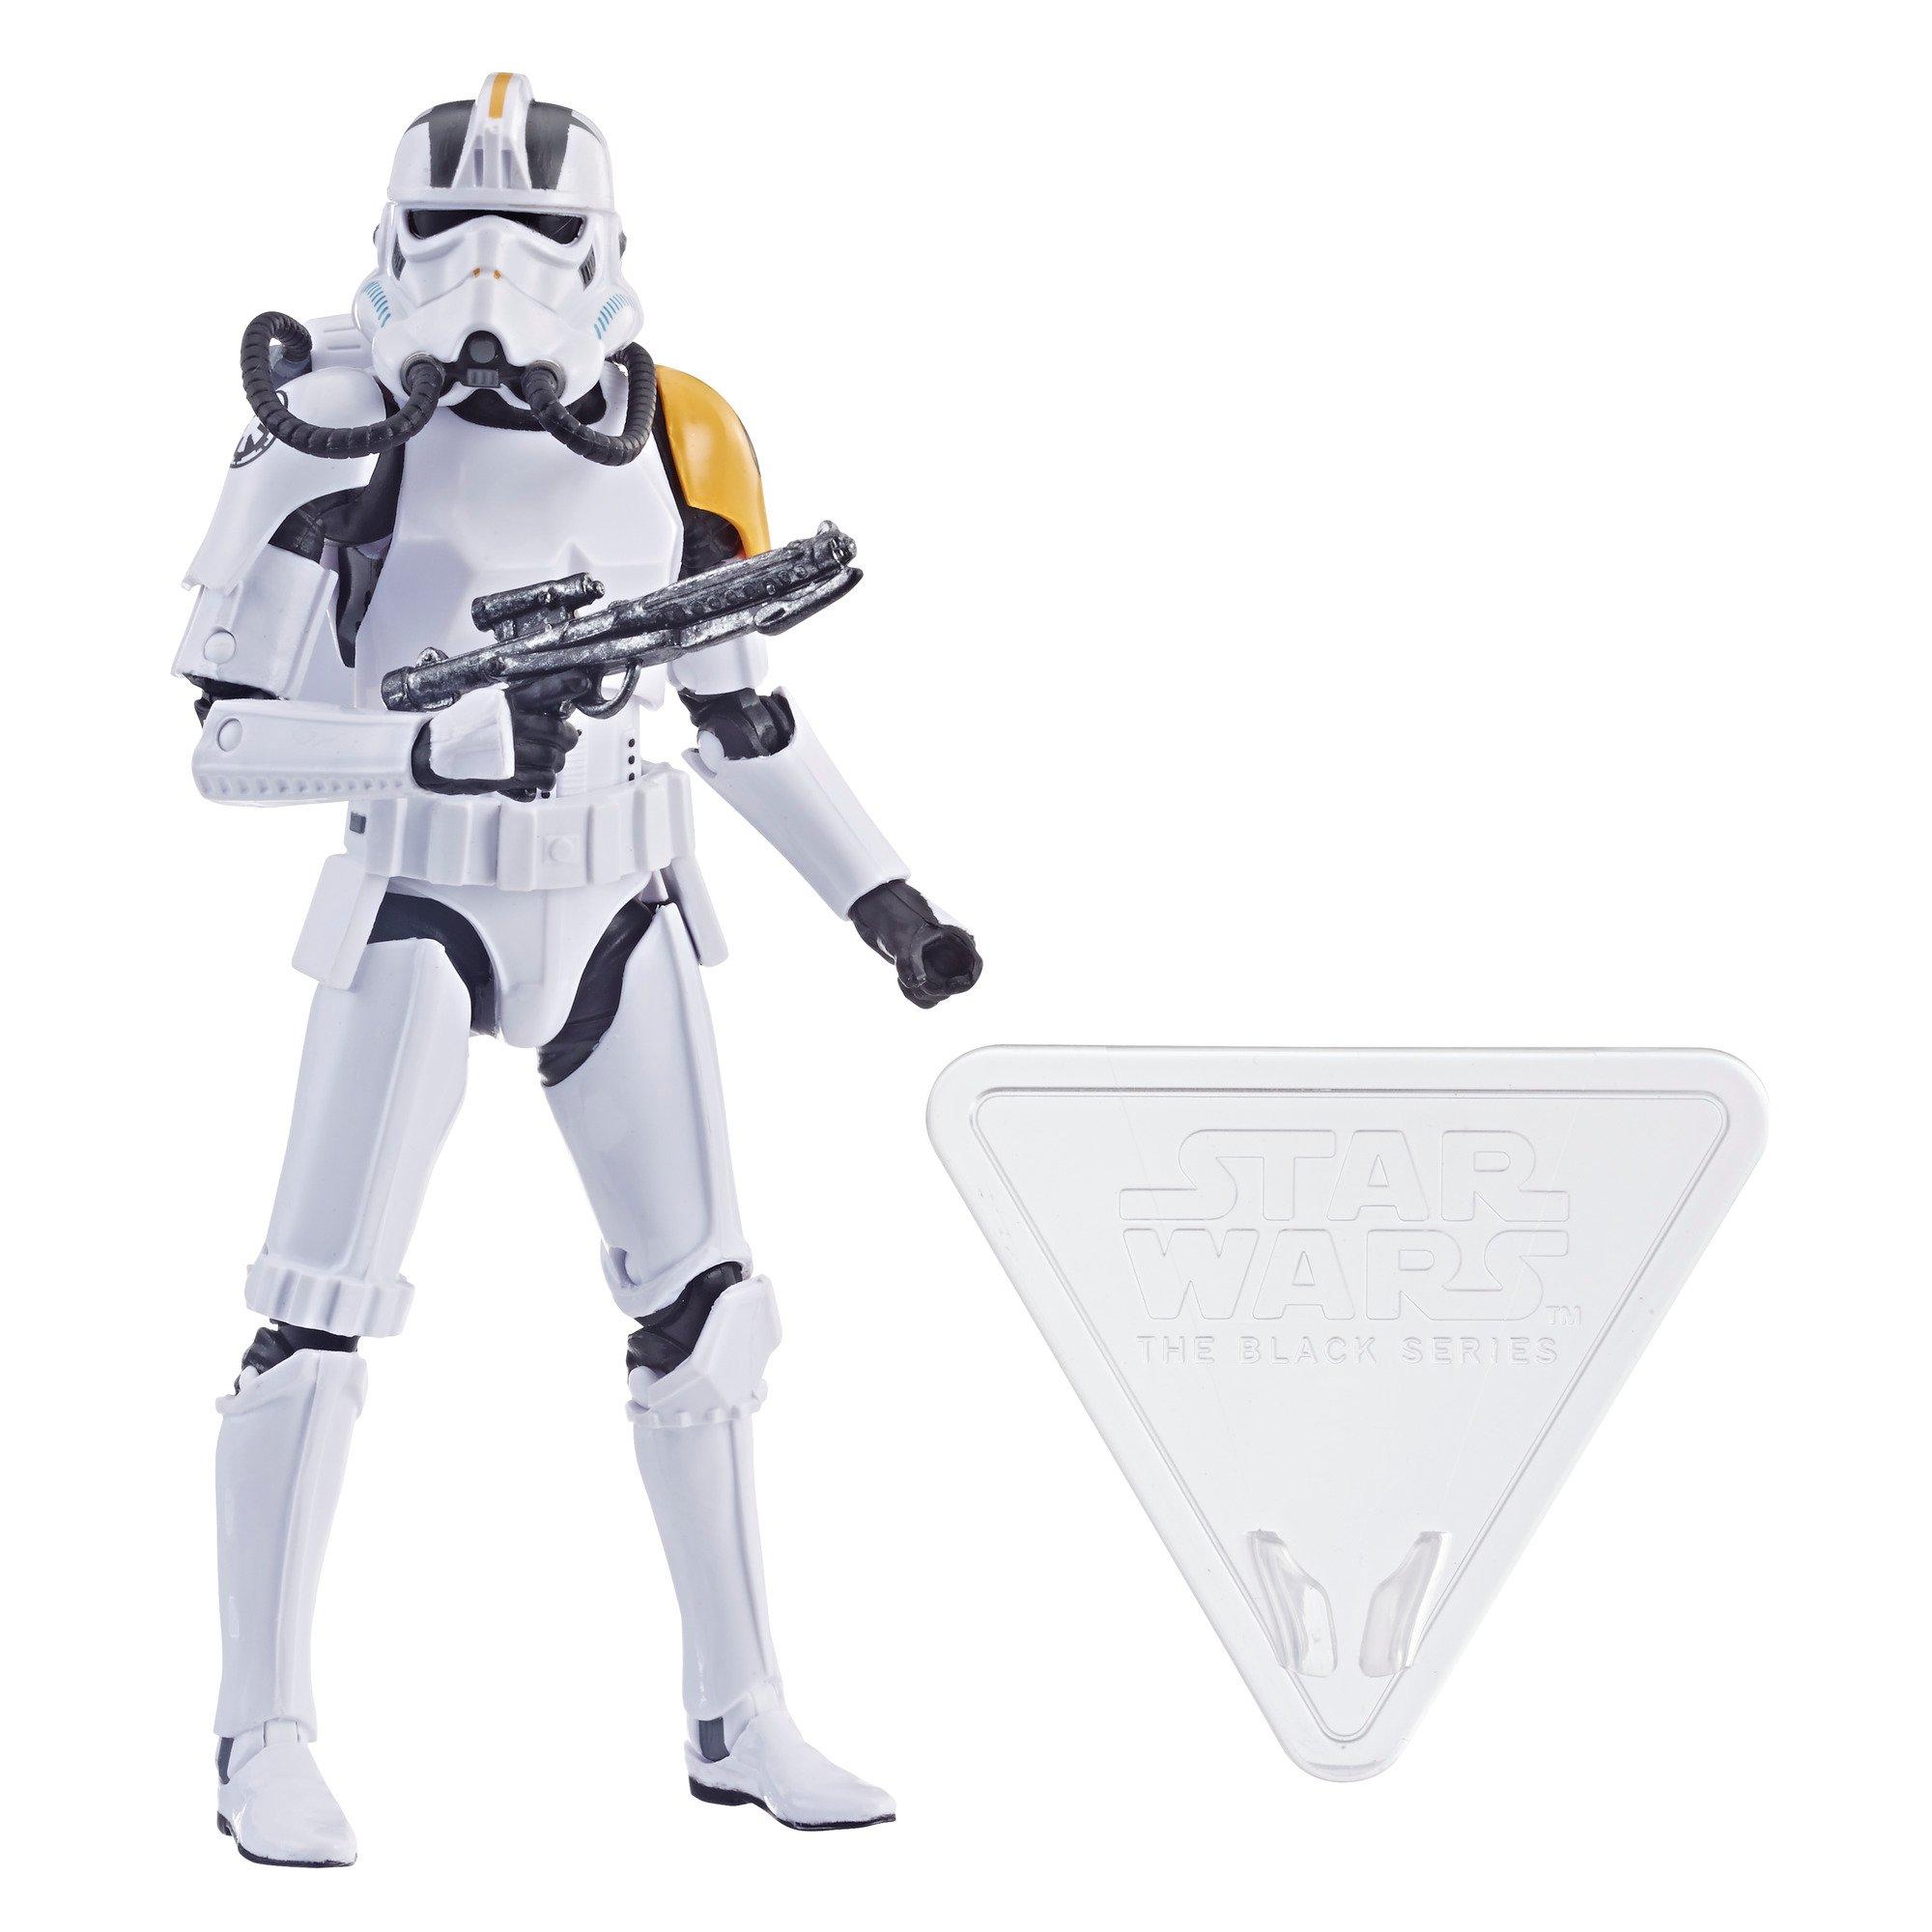 Hasbro Star Wars The Black Series Stormtrooper 13 Action Figure for sale online